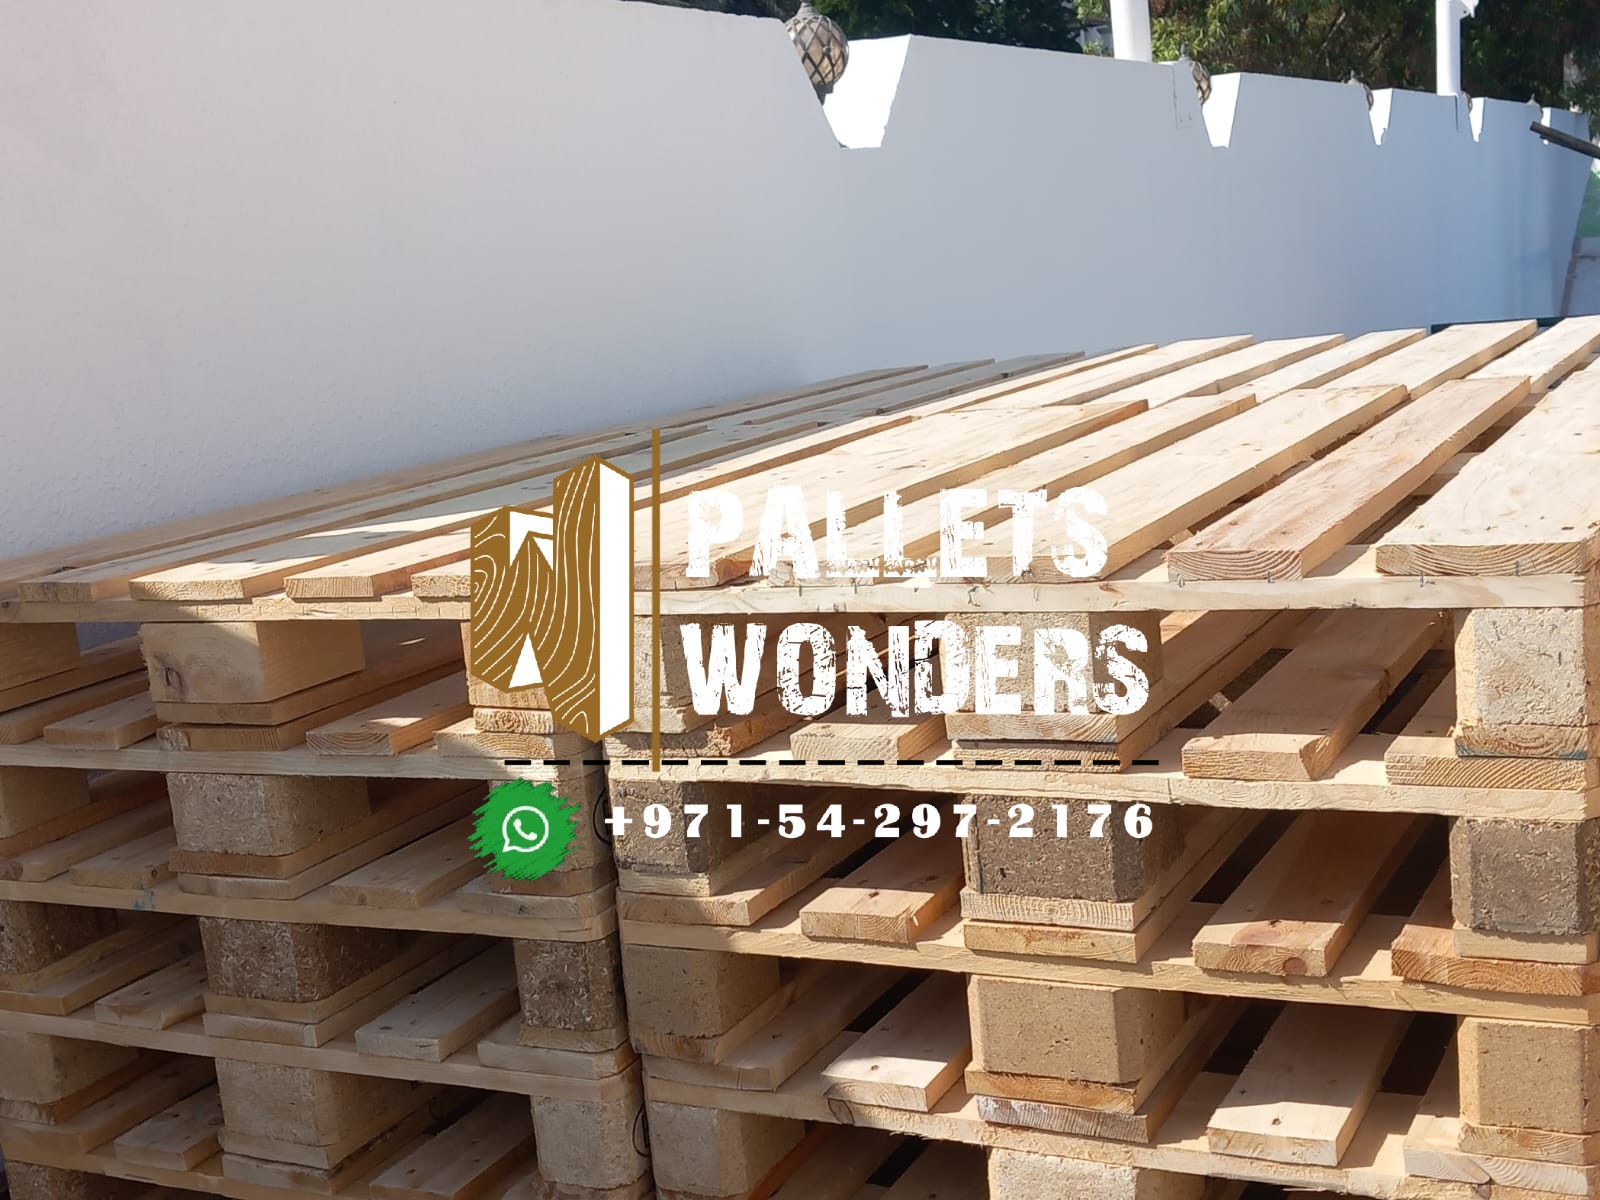 wooden pallets 0542972176 (8).jpg